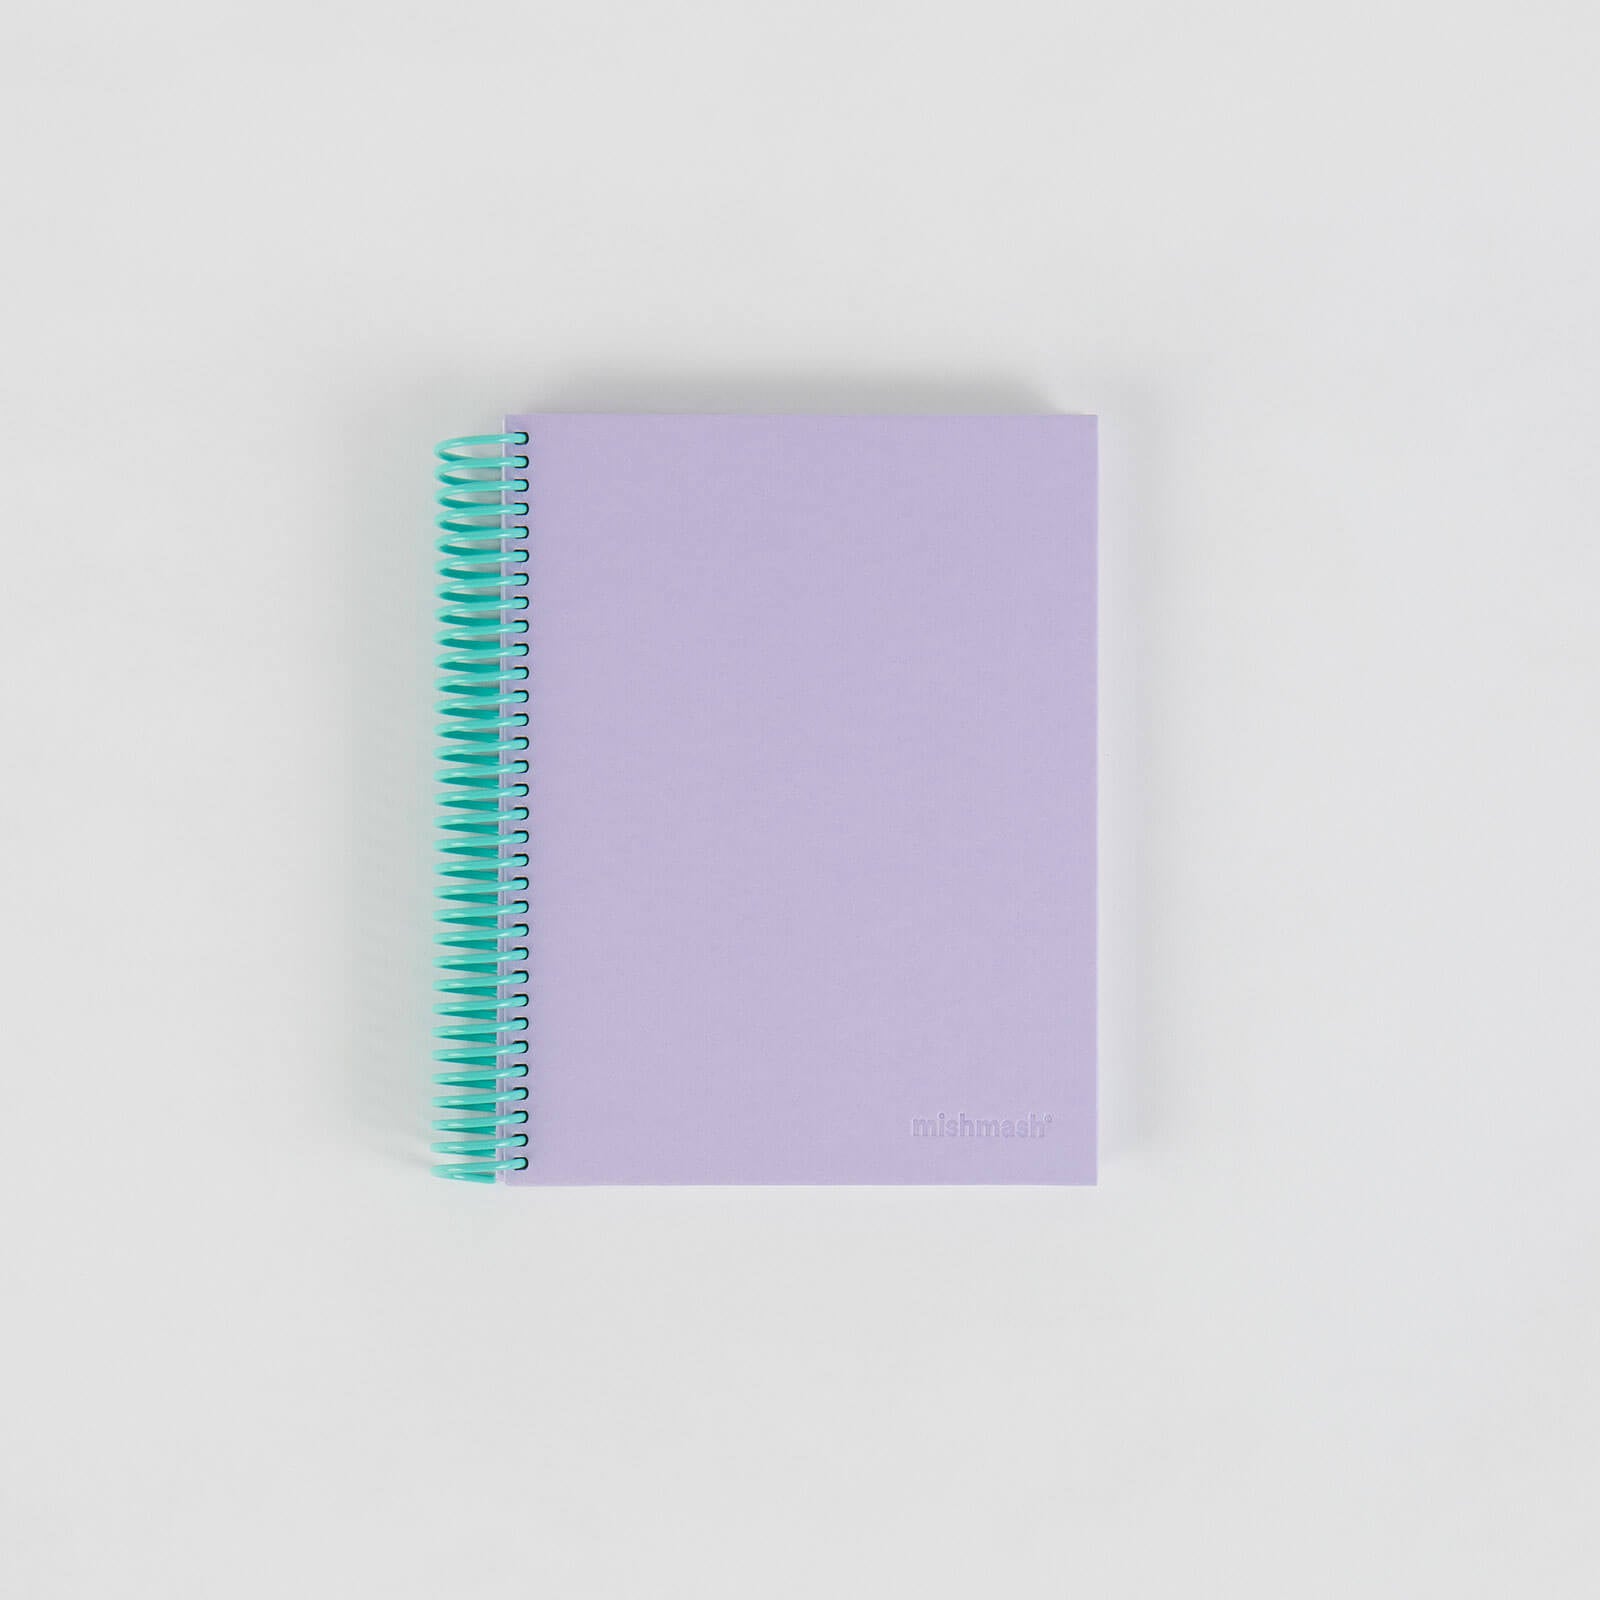 Easy Breezy Lavender Notebook